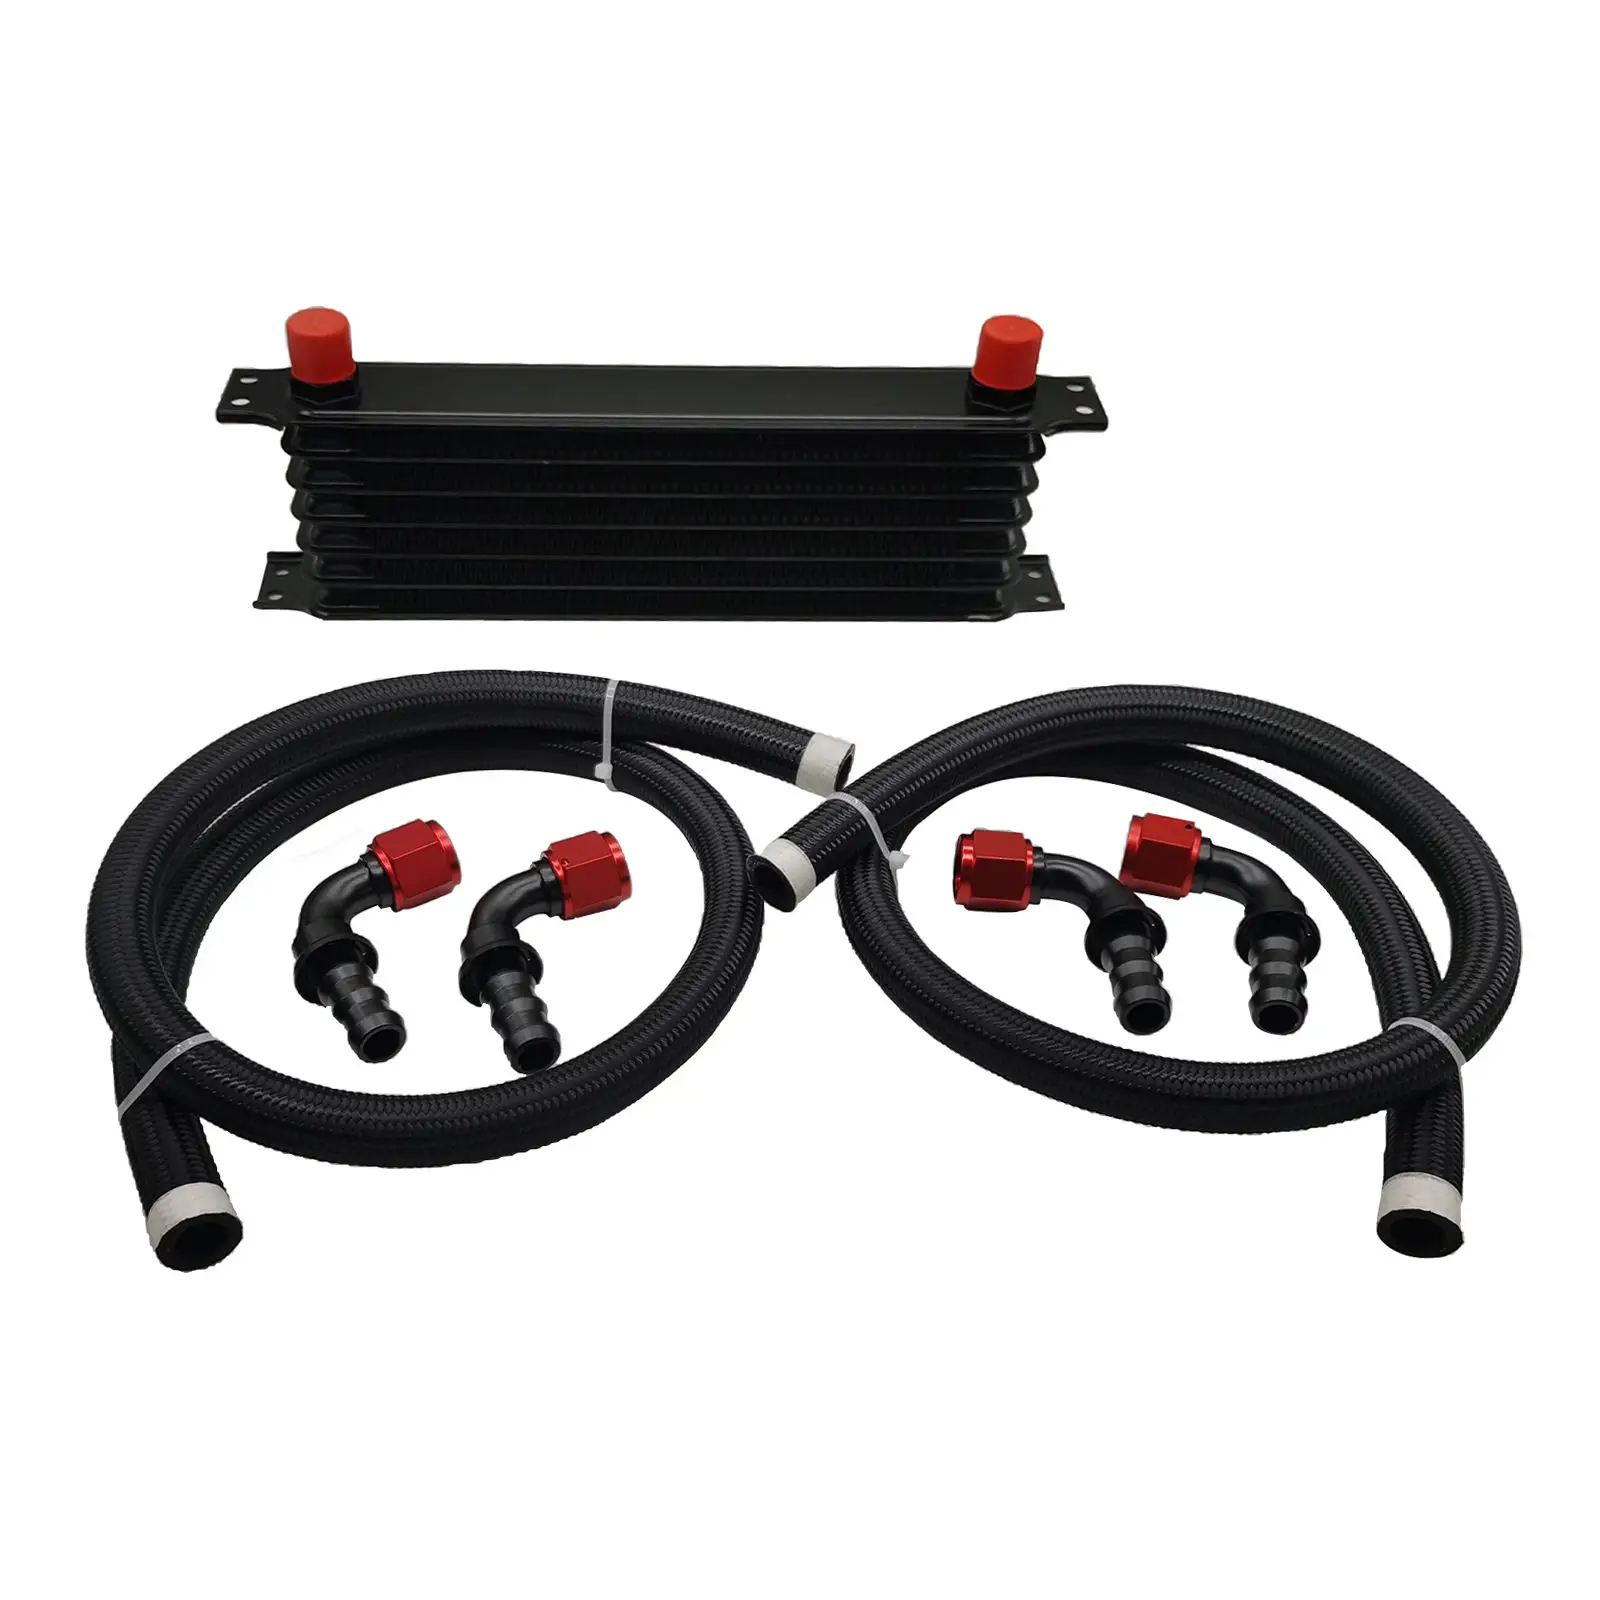 AN10 Oil Cooler Coolers Hose Kit Universal Aluminium Black Automobile Part Acceories Replacement